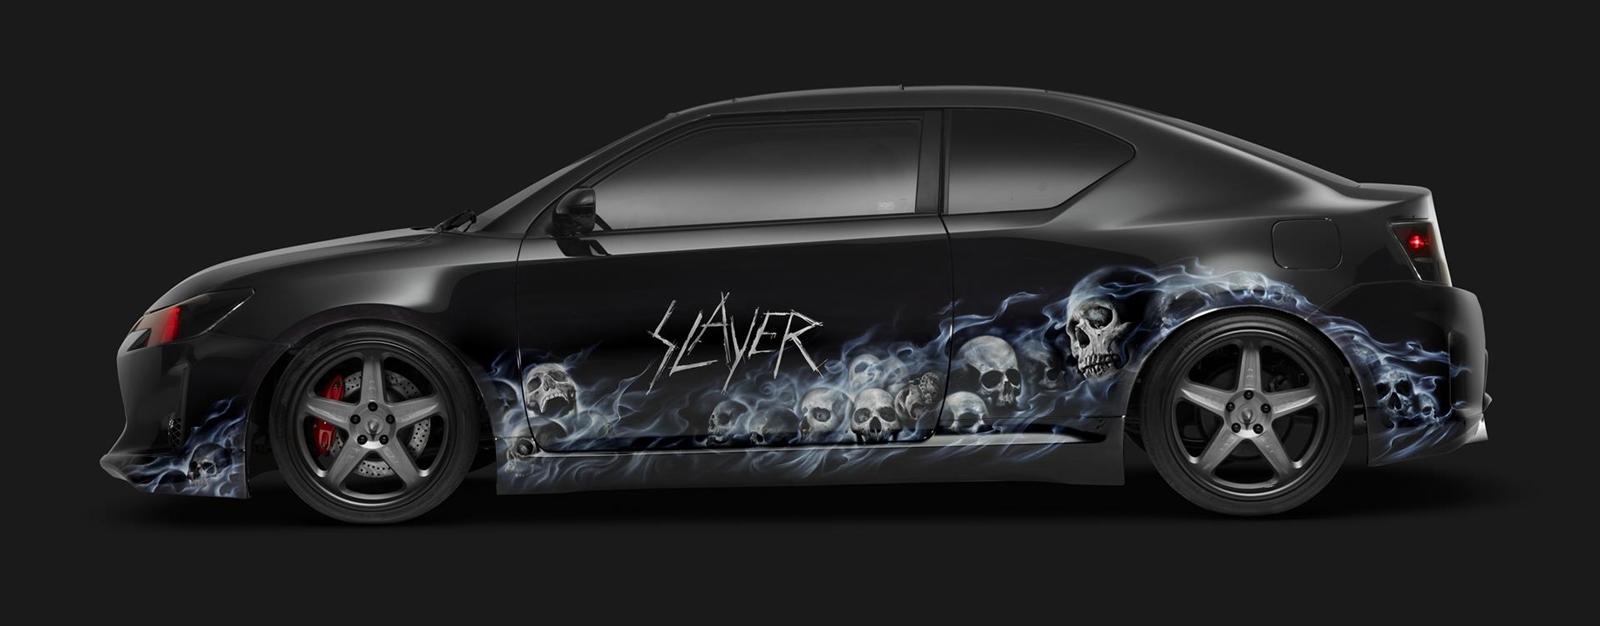 2014 Scion Killer-Sounding Slayer tC